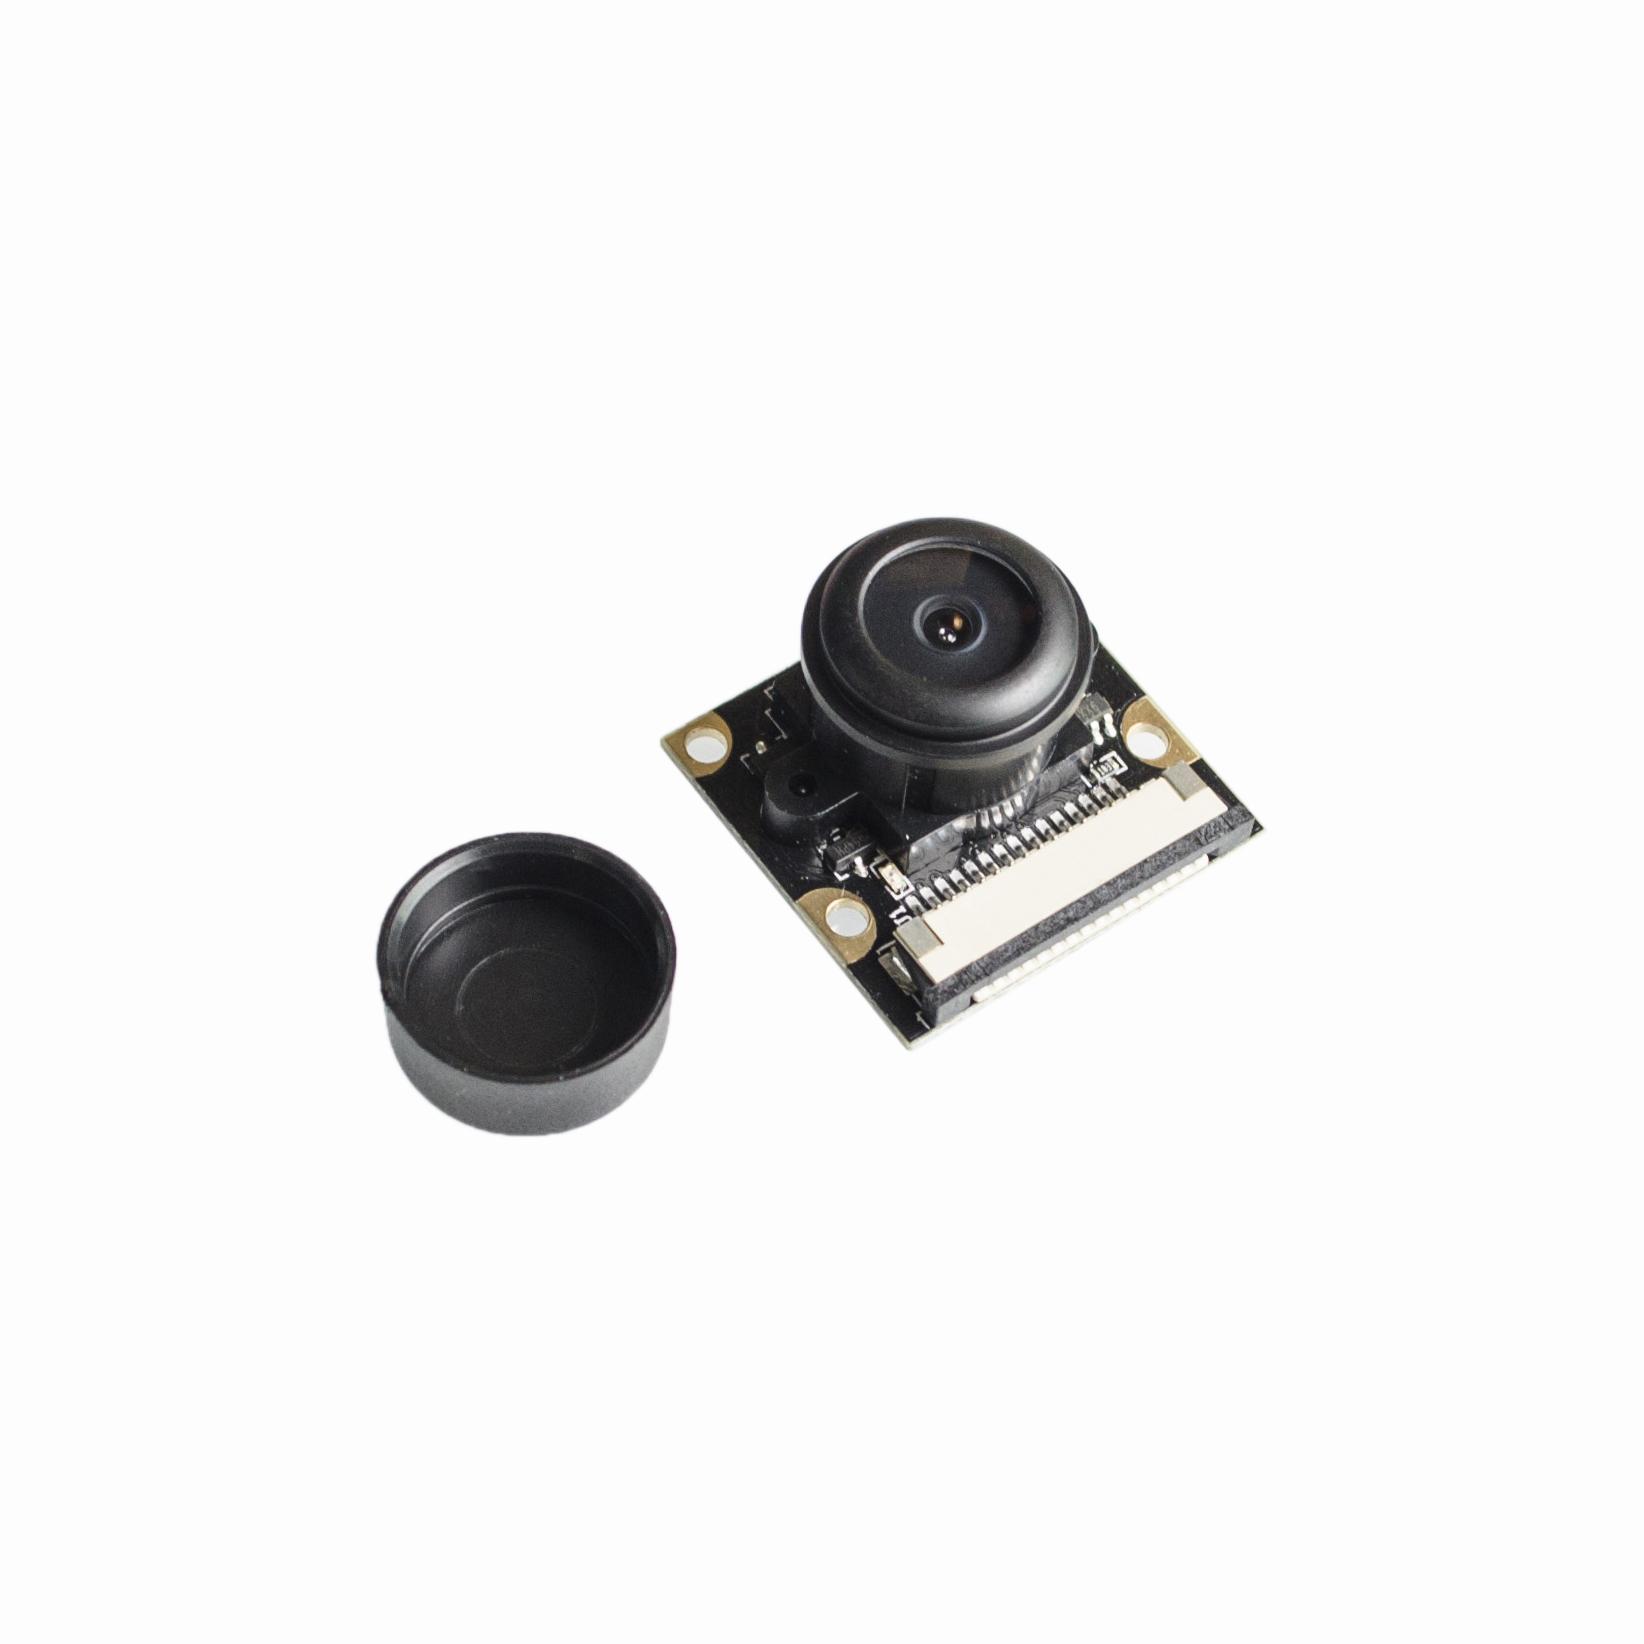 Raspberry-Pi-Camera-Focal-Adjustable-Night-Vision-Camera-Module-for-Raspberry-Pi-2-3-Model-B-Raspberry-Pi-Noir-camera